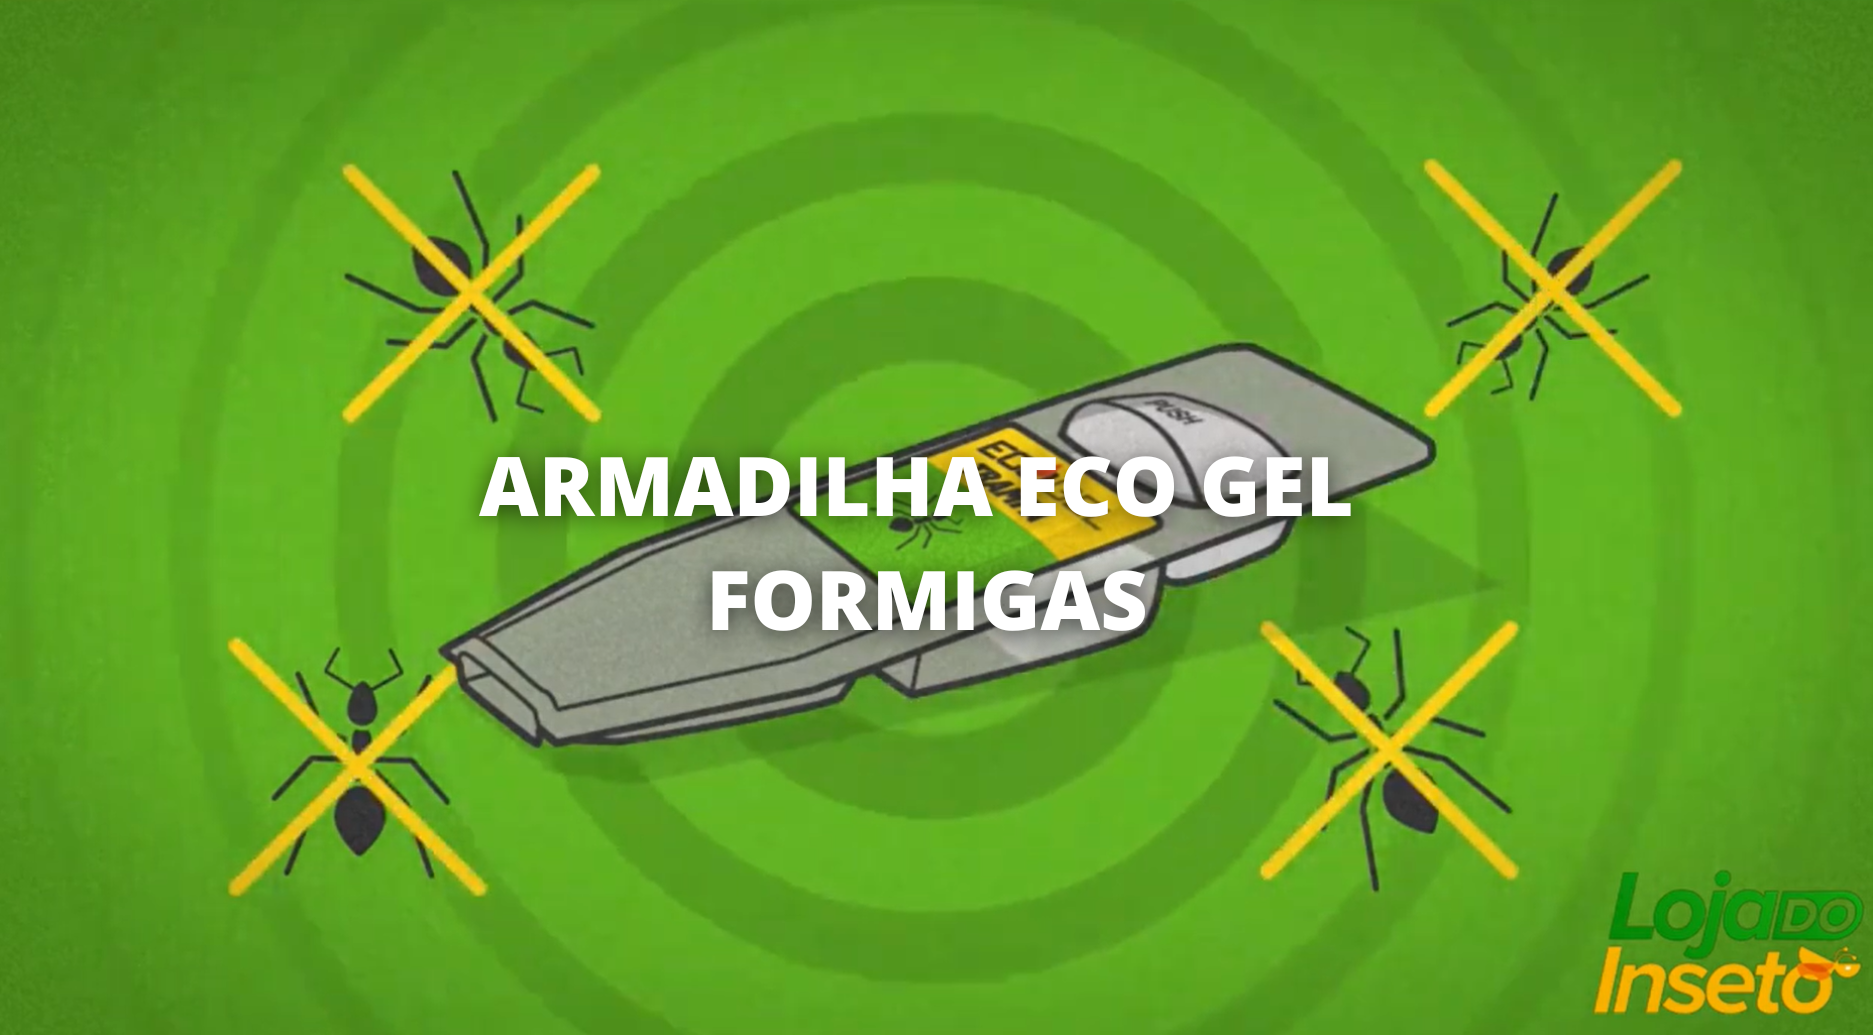 Load video: Armadilha inseticida ecogel anti-formigas